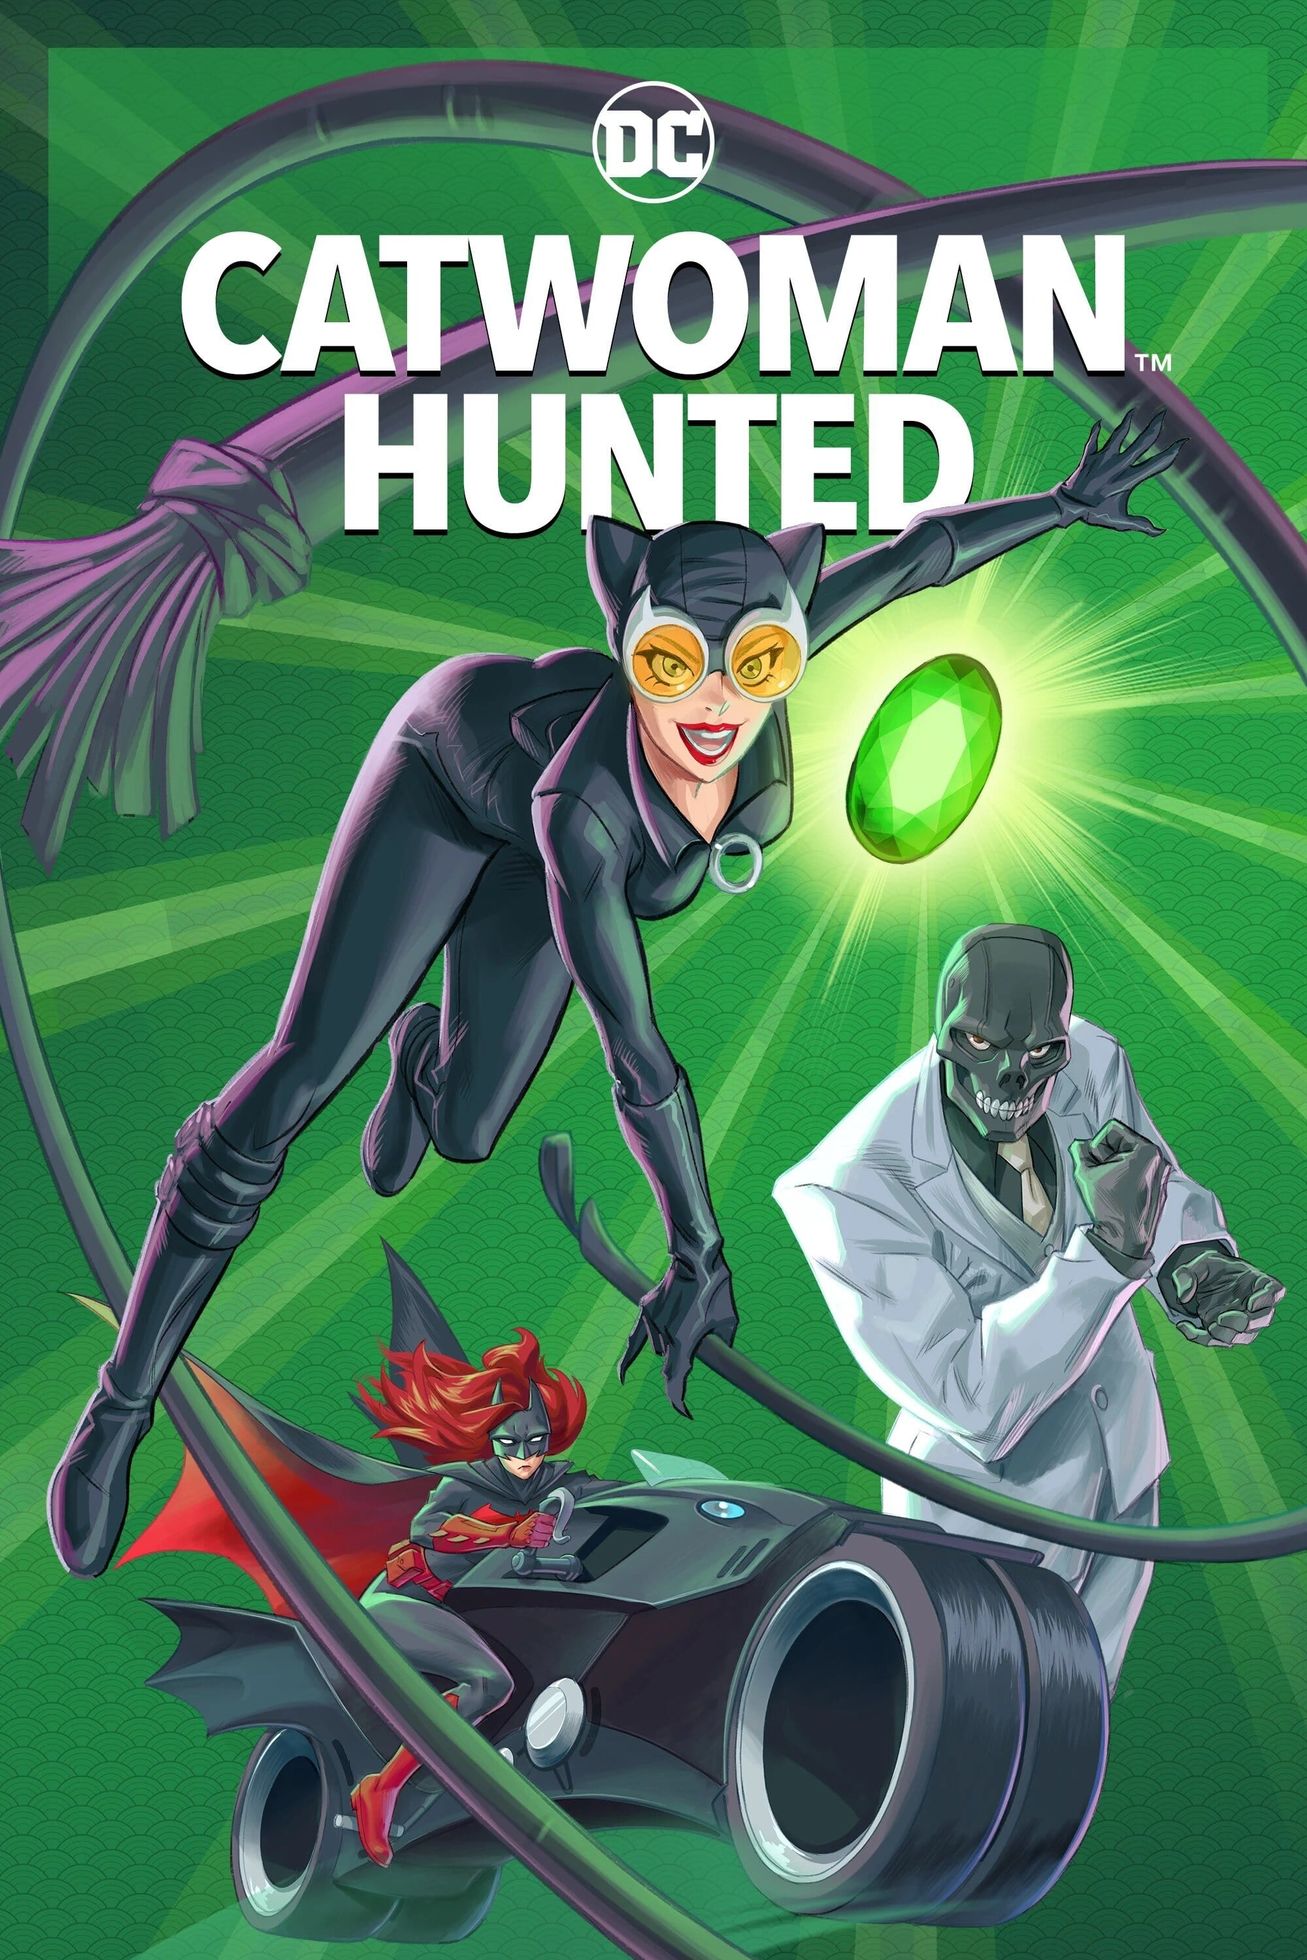 Le film d'animation Catwoman: Hunted débarque